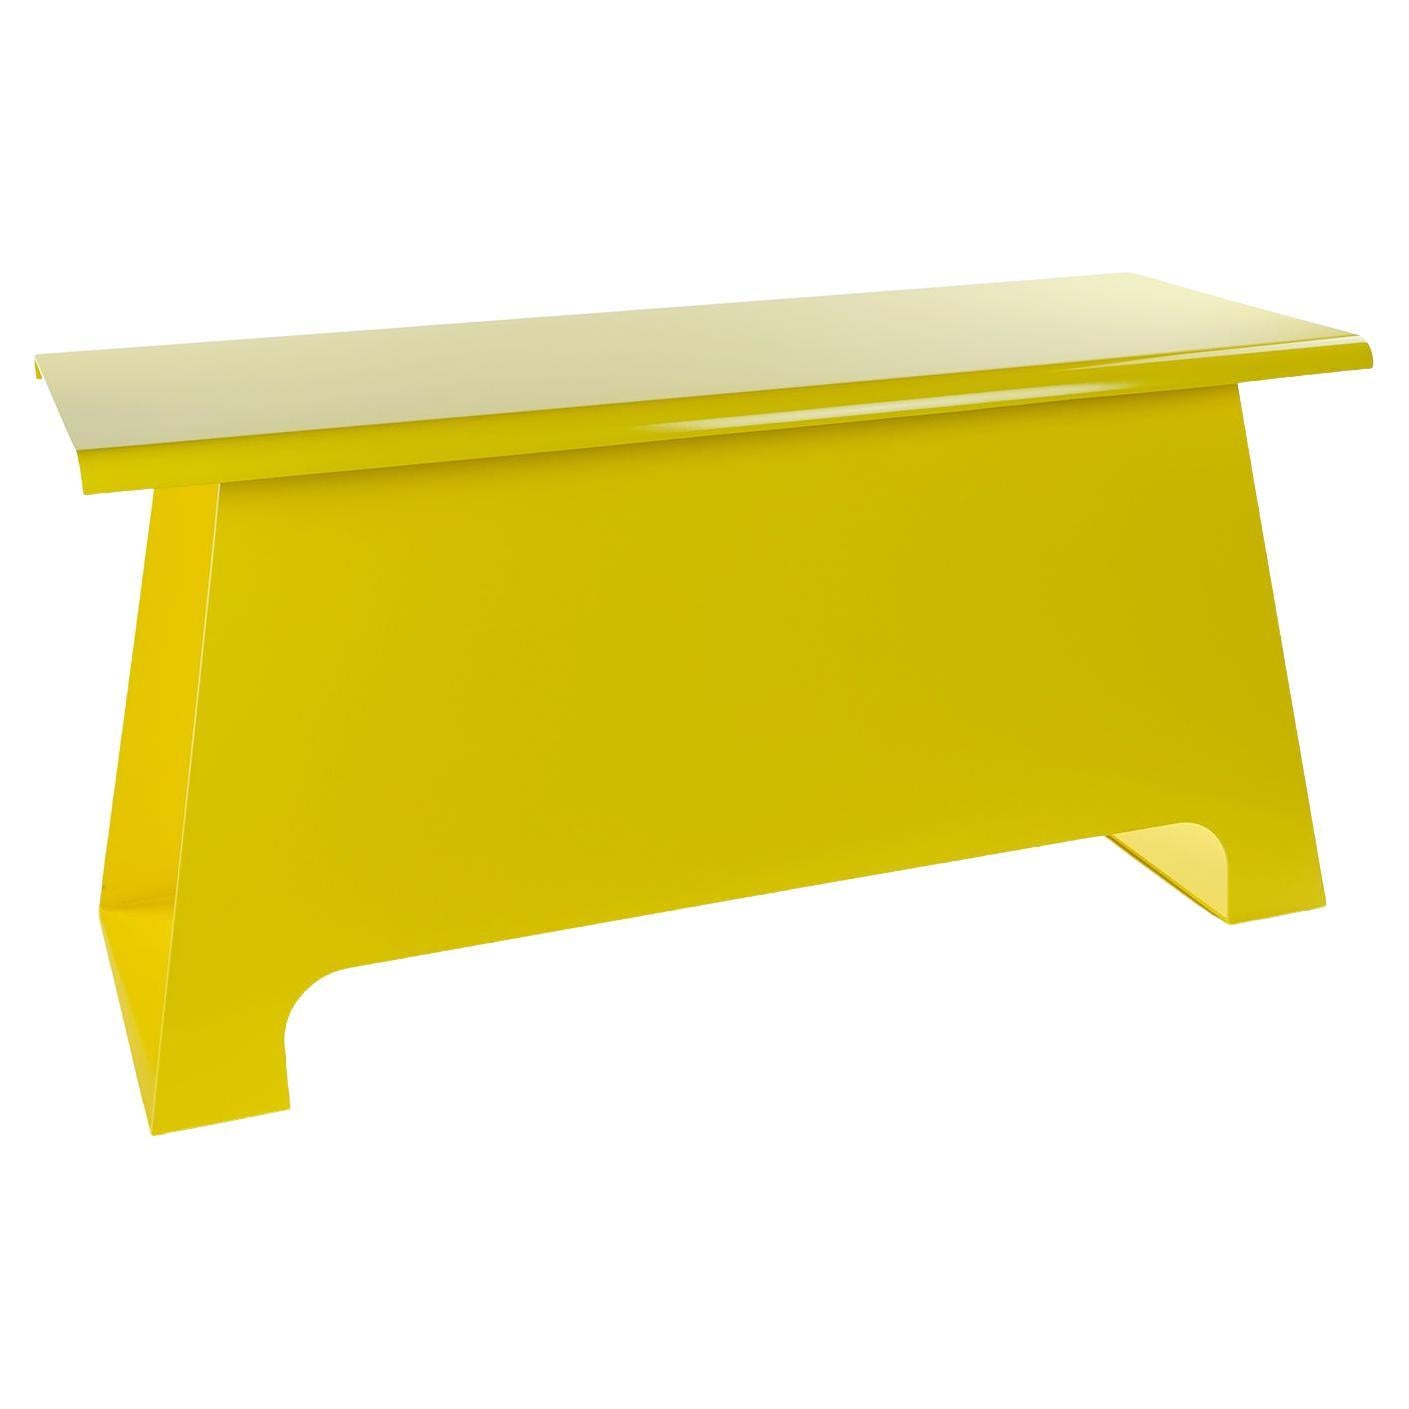 Contemporary Dutch Design Bench Side Table Steel Indoor Outdoor/ Yellow